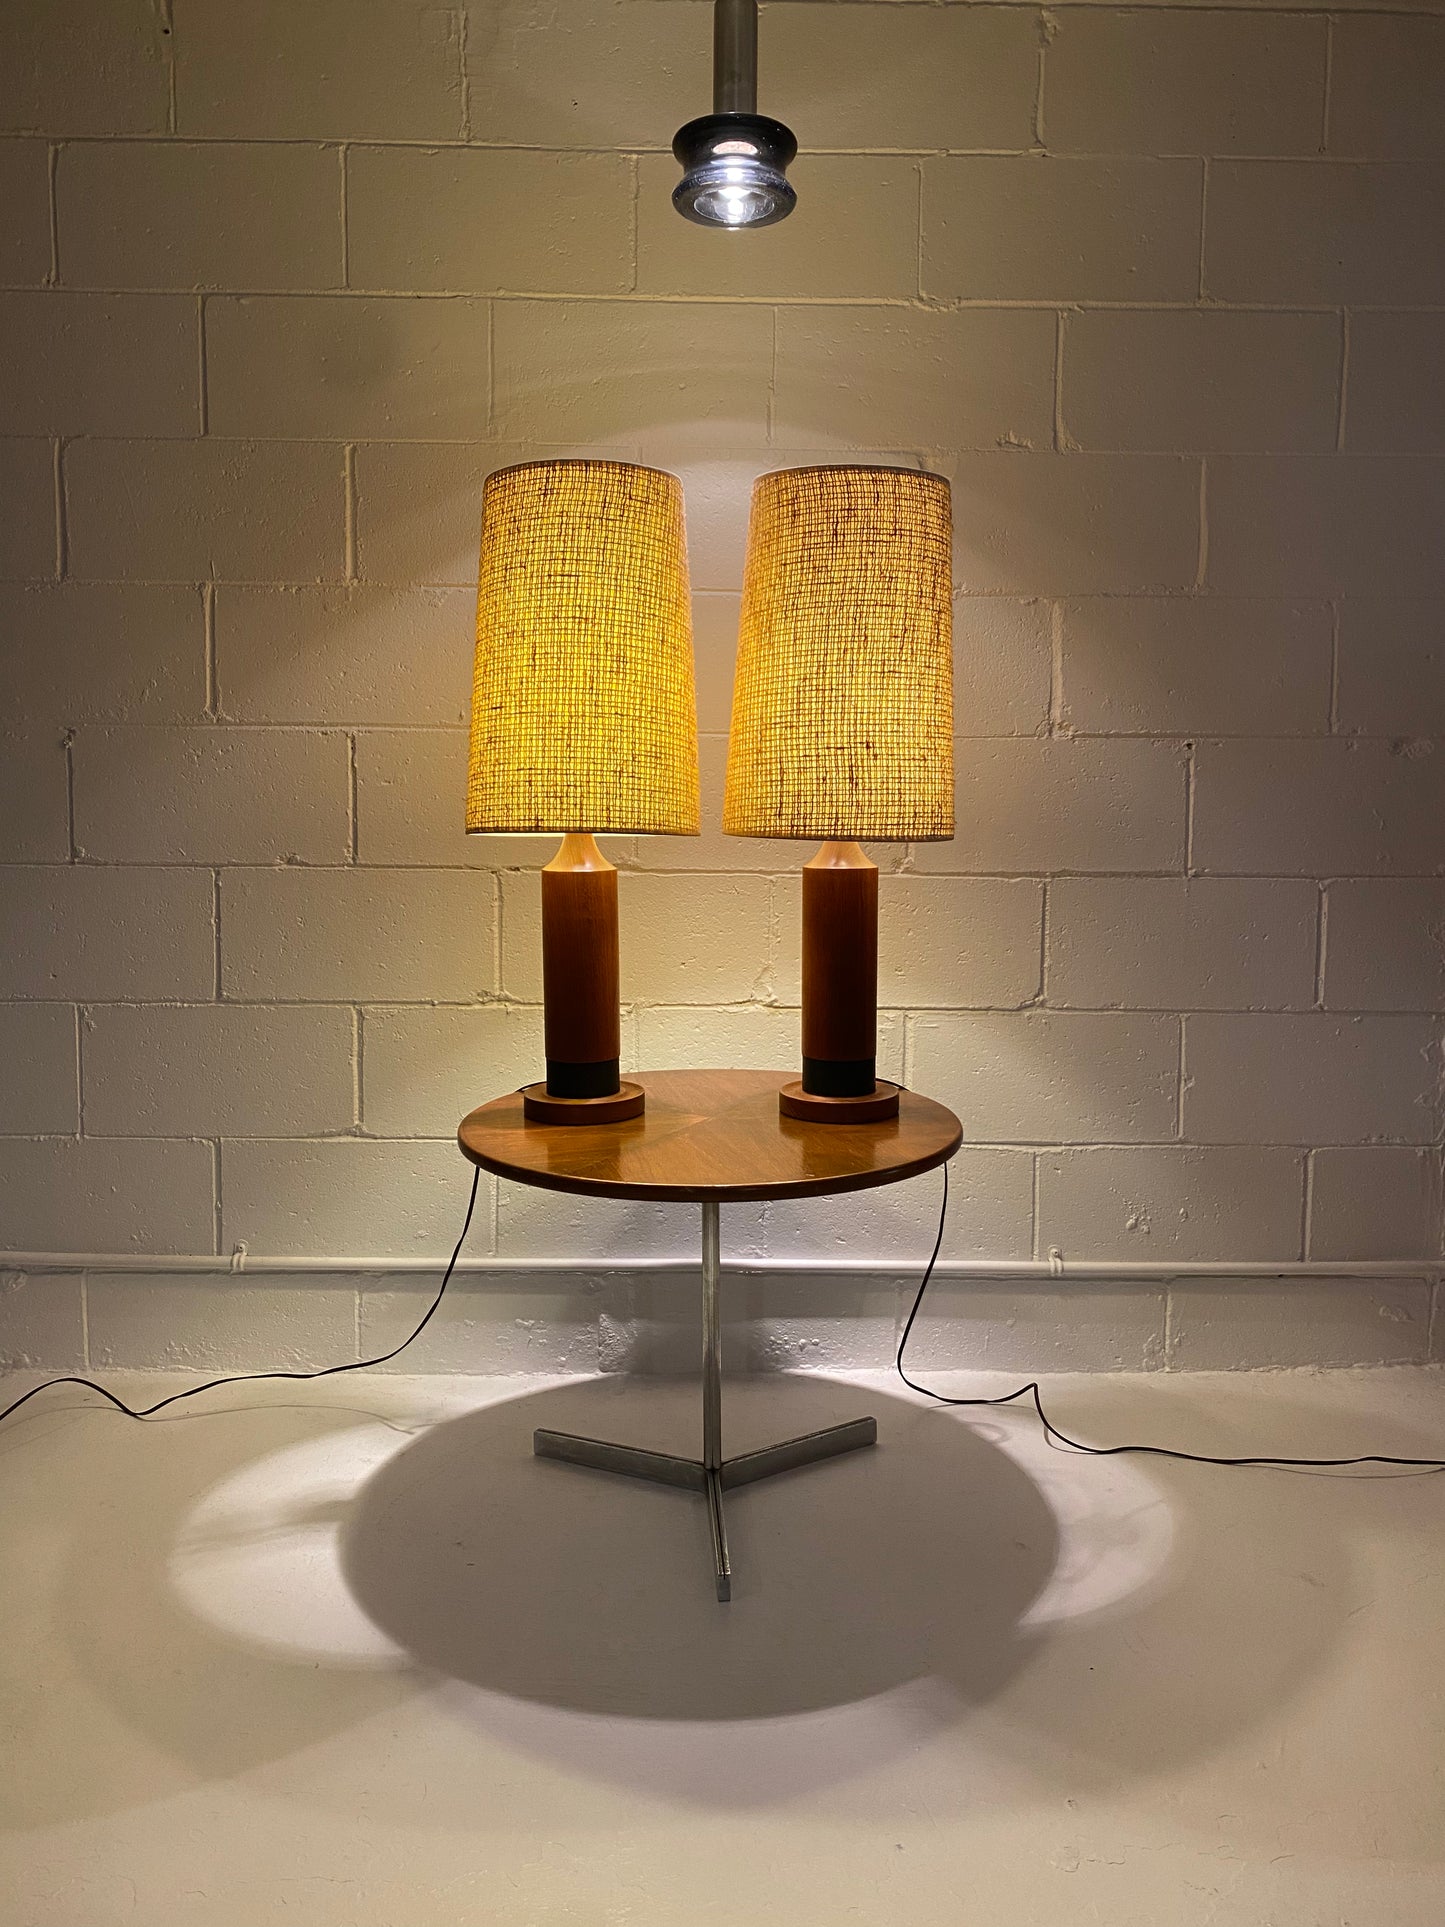 Solid Teak Turned Table Lamps Mid Century Modern 1960's